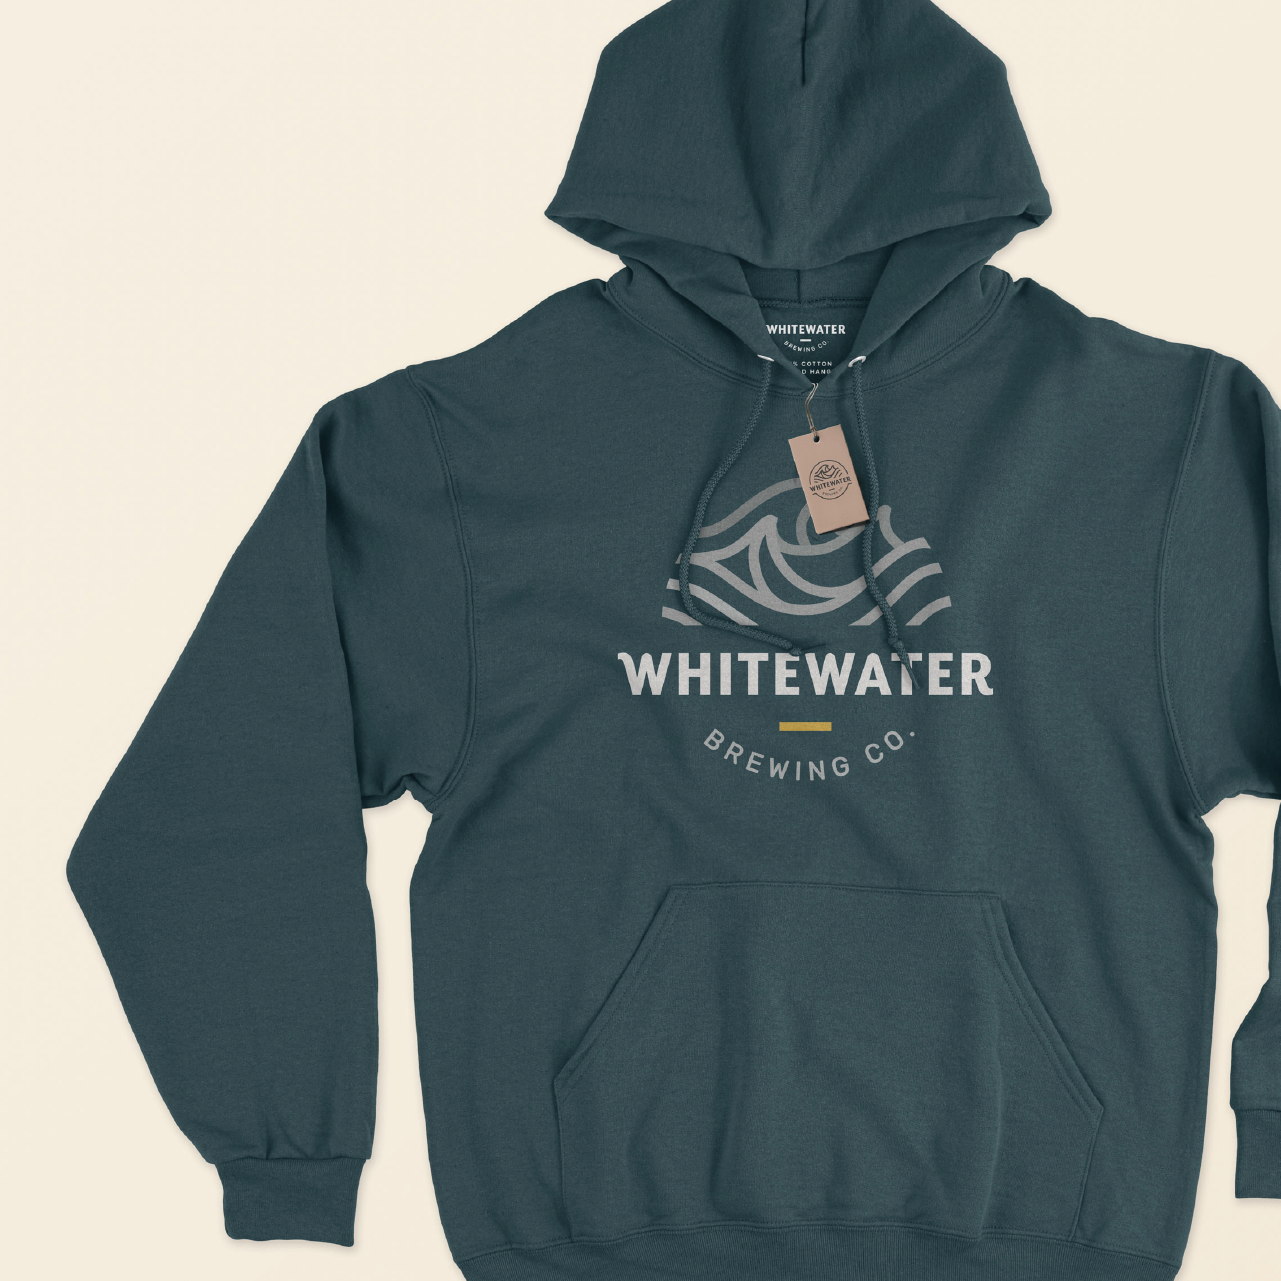 Whitewater sweater